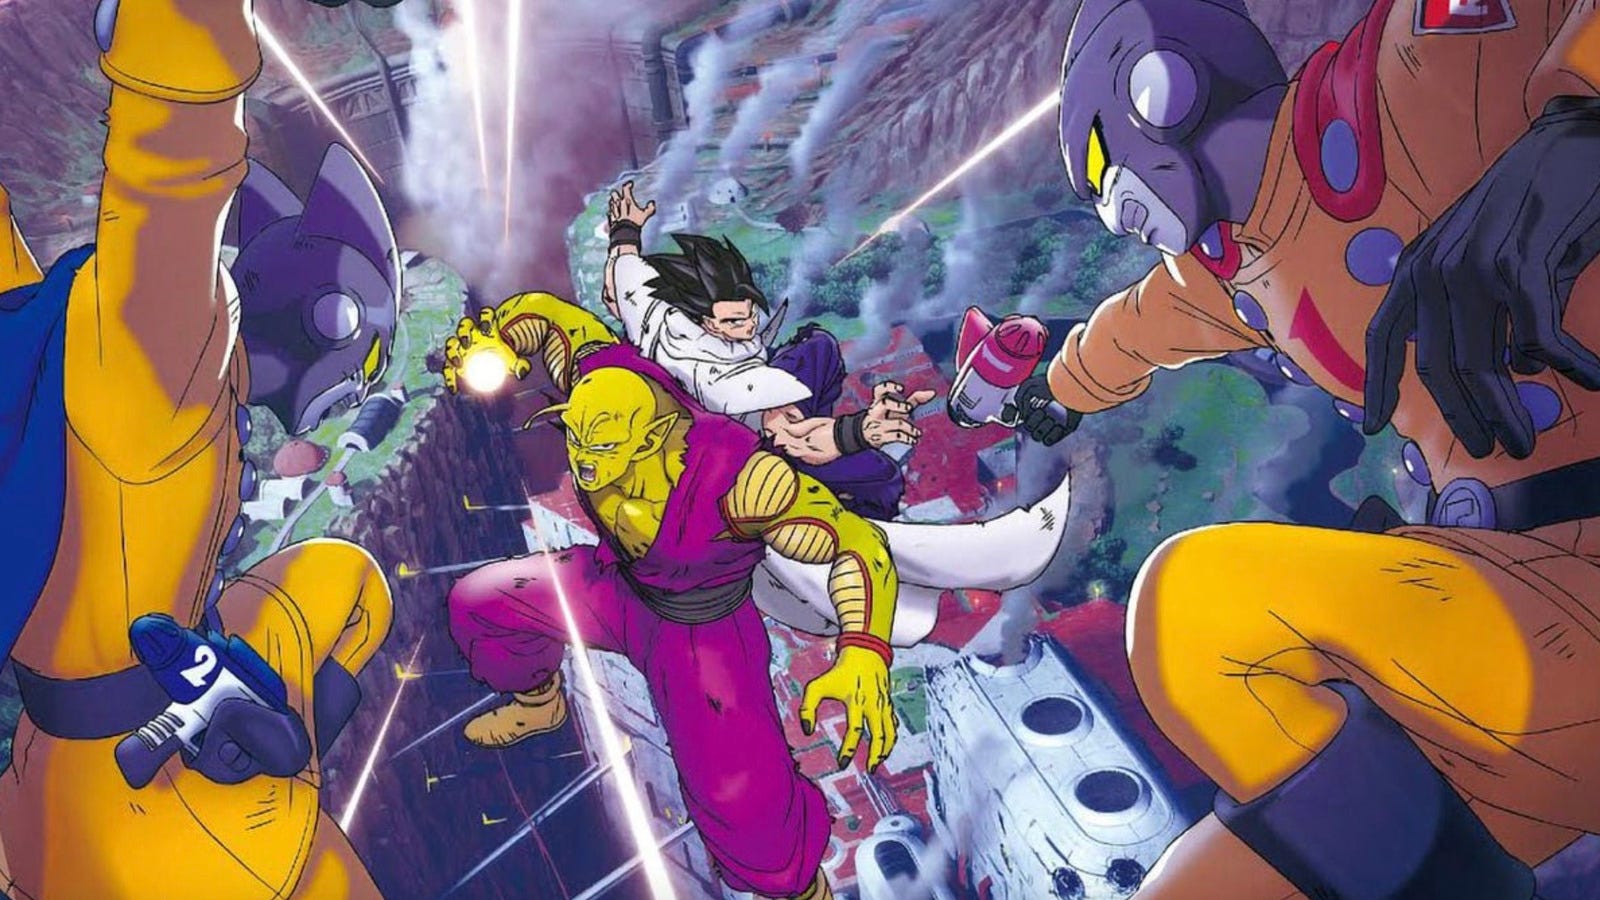 Dragon Ball Super: SUPER-HERÓI chega à Crunchyroll em julho